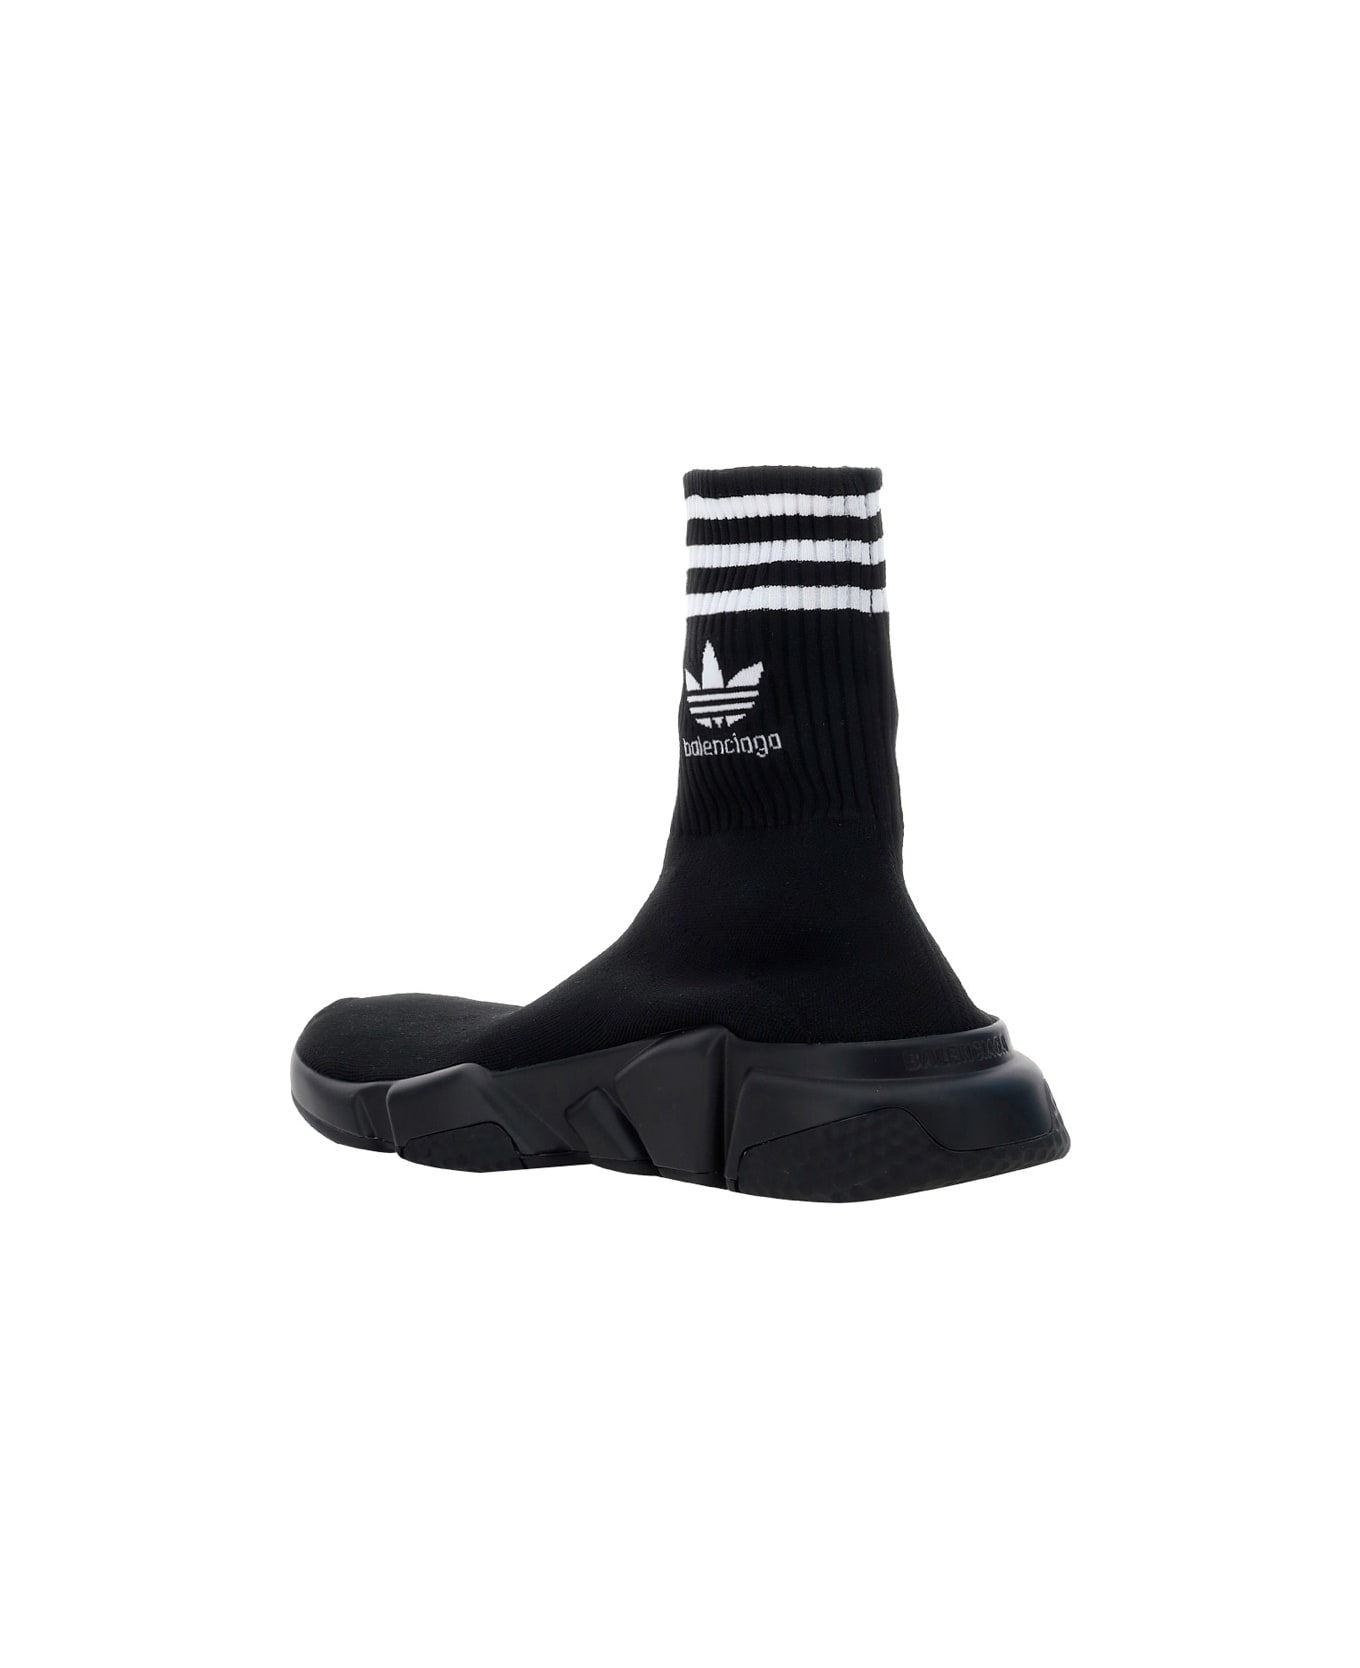 Balenciaga X Adidas -speed Trainers Knitted Sock-sneakers - Black/black/wht Logo